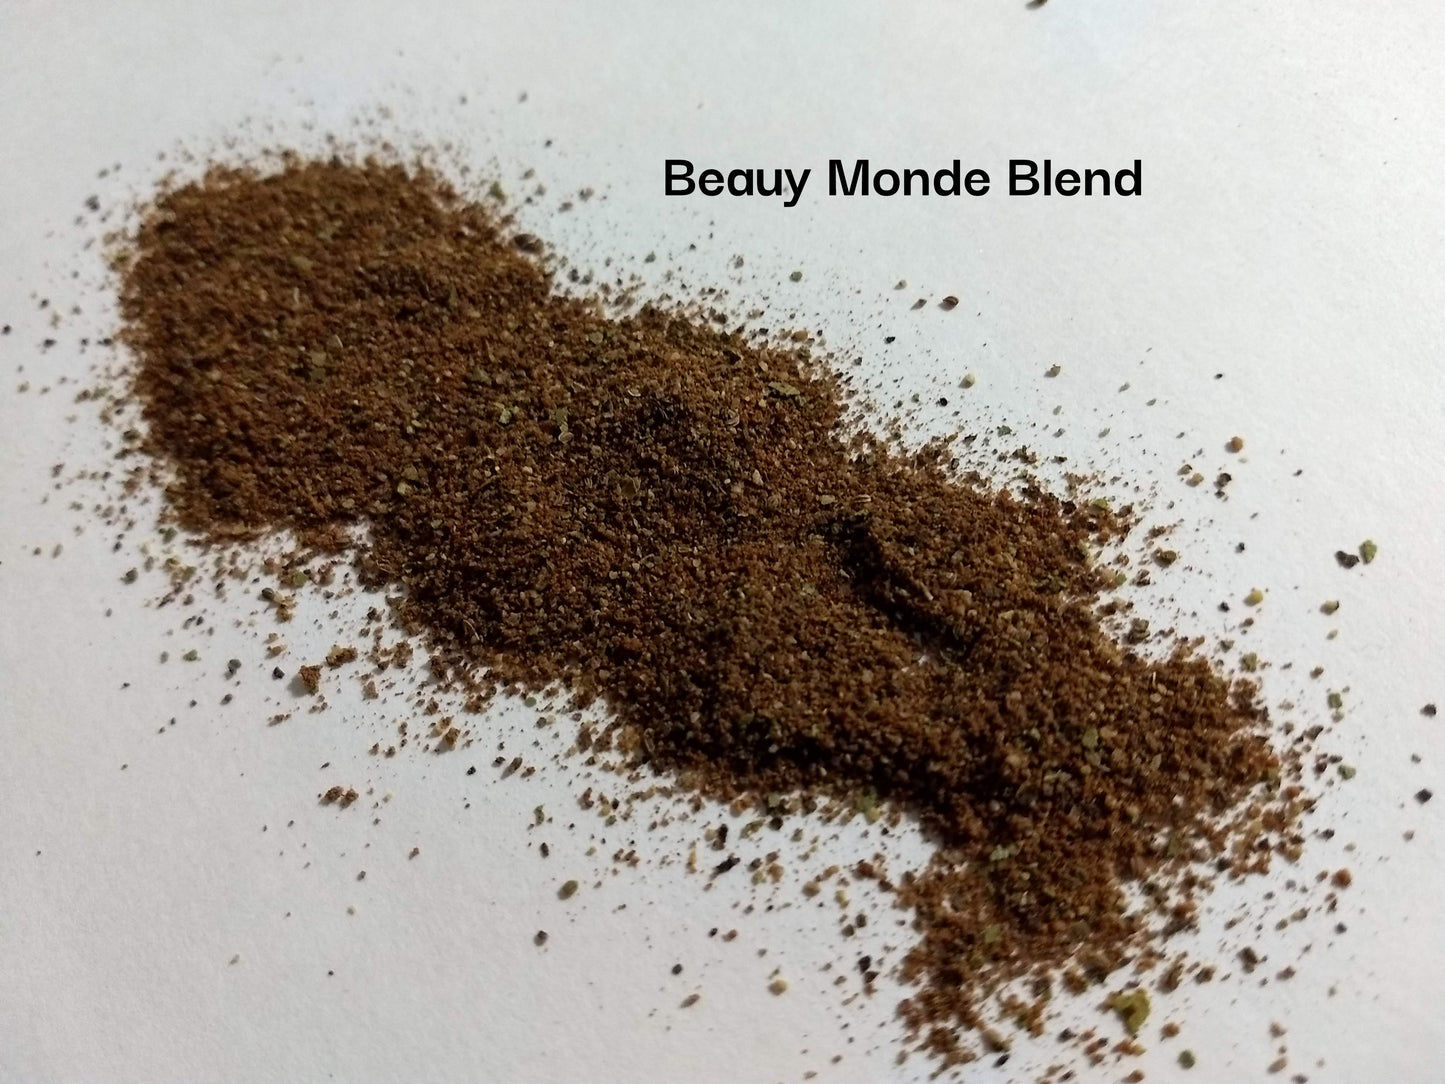 Beau Monde style seasoning, Beauy Monde, Backyard Patch Herb Blend, Vintage Spice, but with, no salt